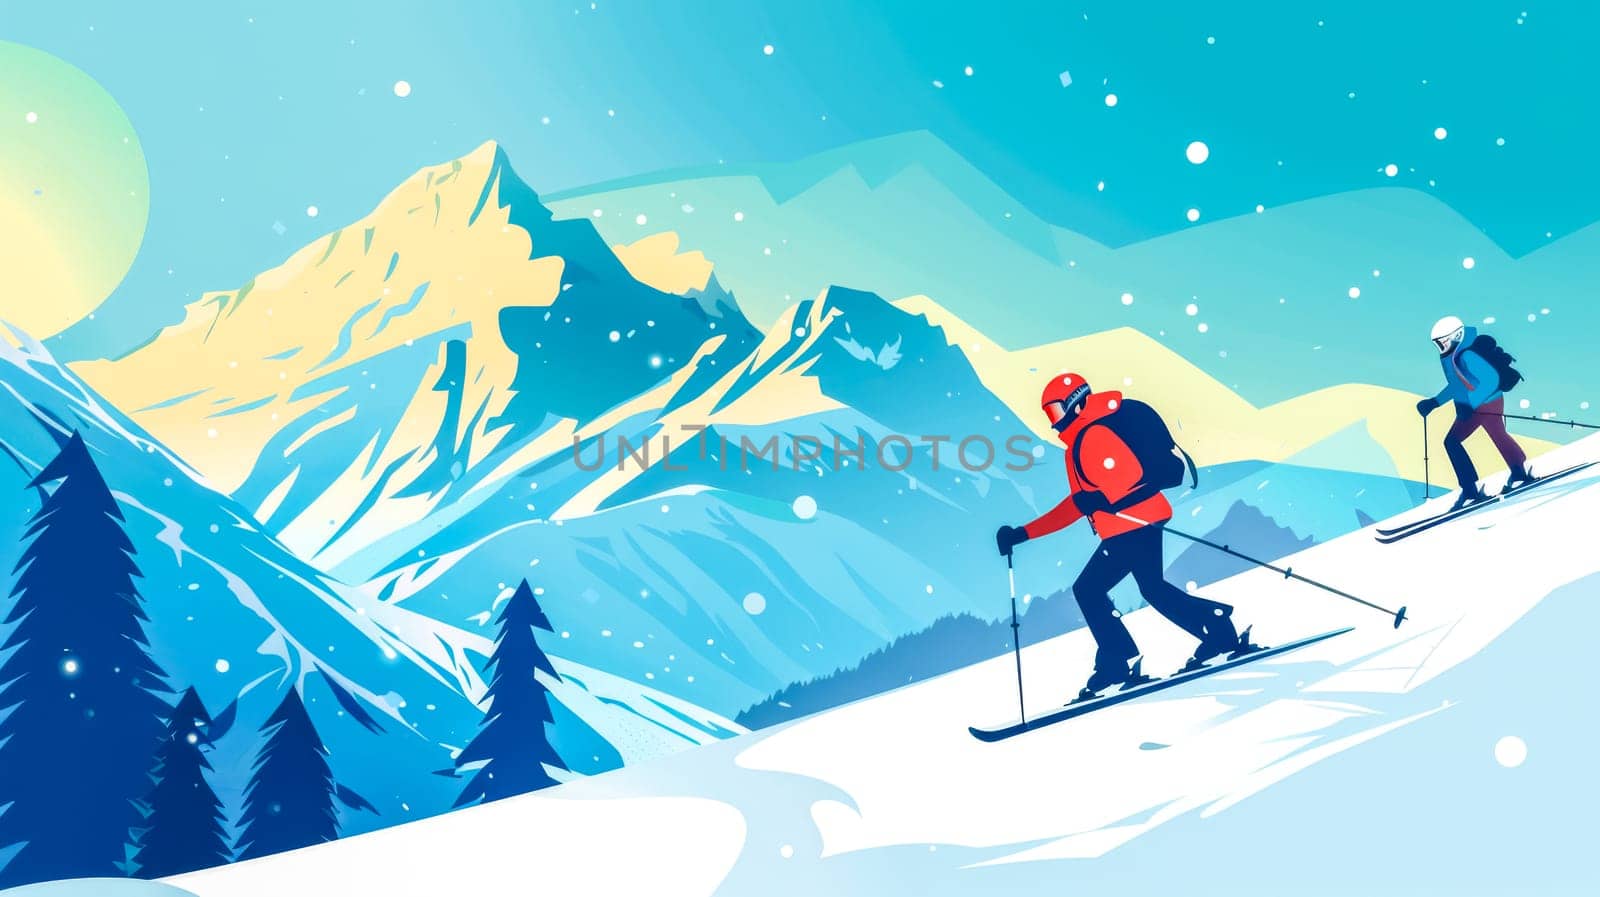 Winter wonderland adventure - skiers on mountain slope by Edophoto